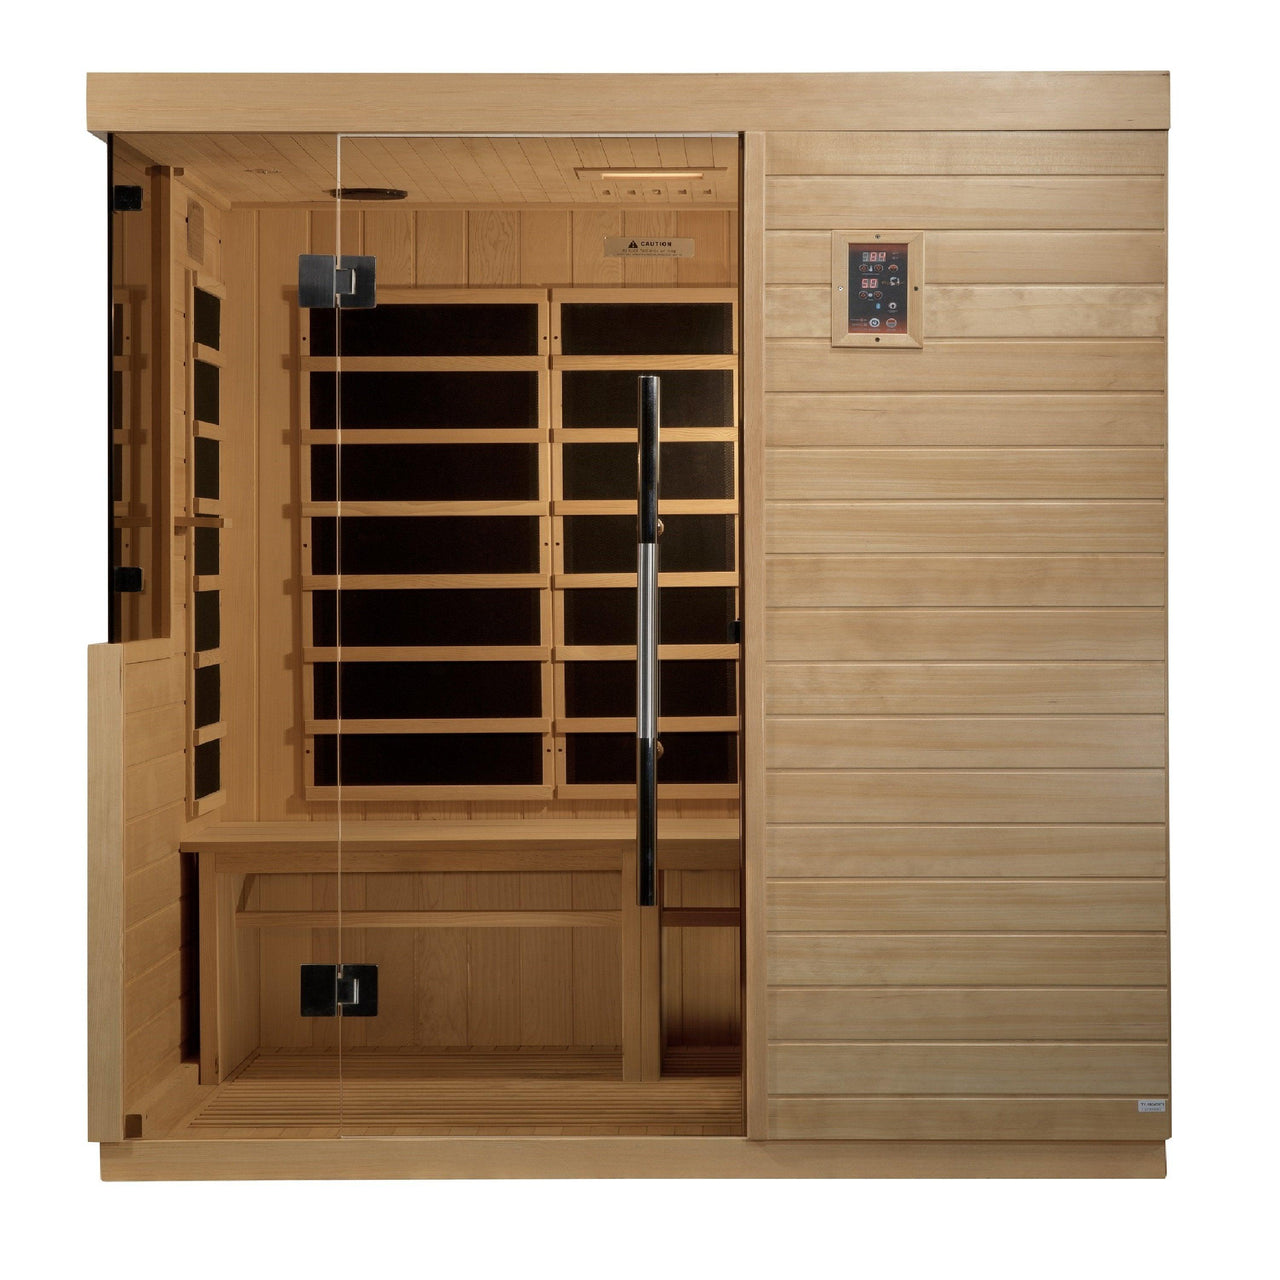 Golden Designs Sauna: Bilbao 3 Person Ultra Low EMF FAR Infrared Sauna - DYN-5830 - Fire Pit Stock